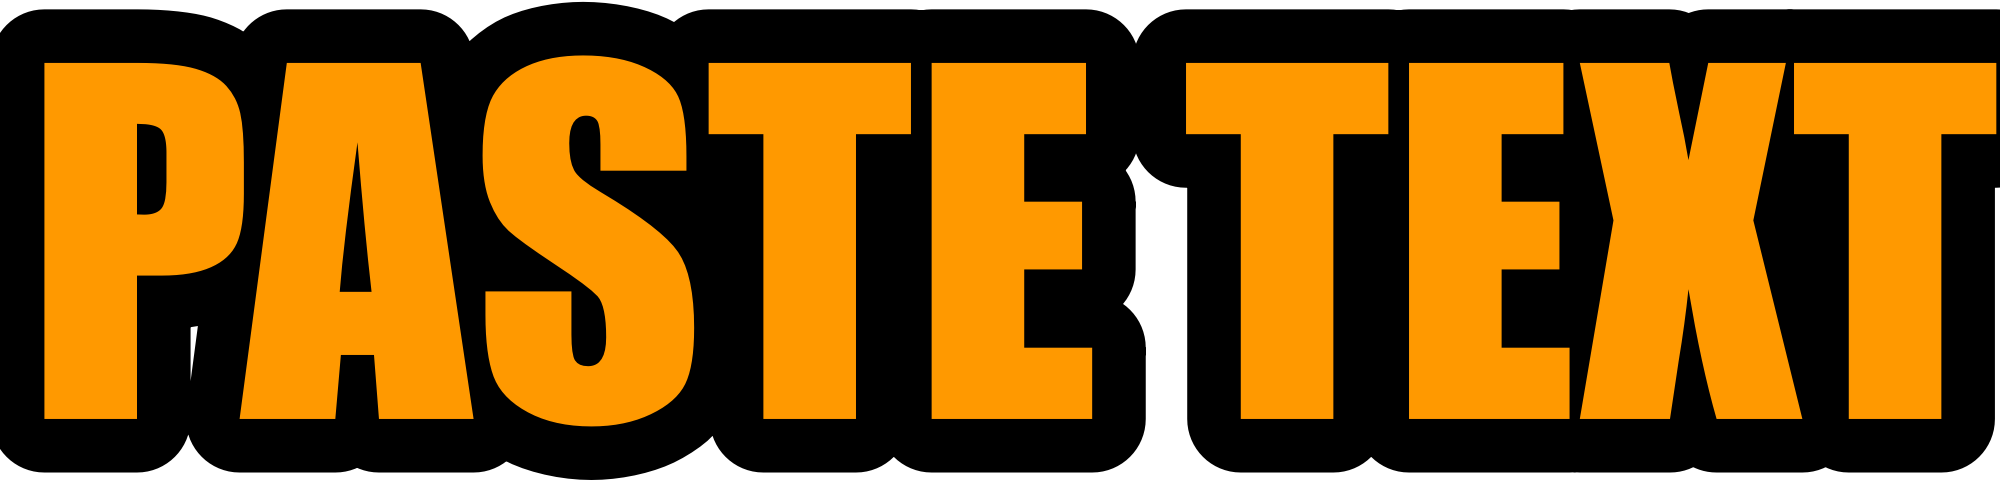 PasteText | Text Hosting - Online Notes - Pastebin